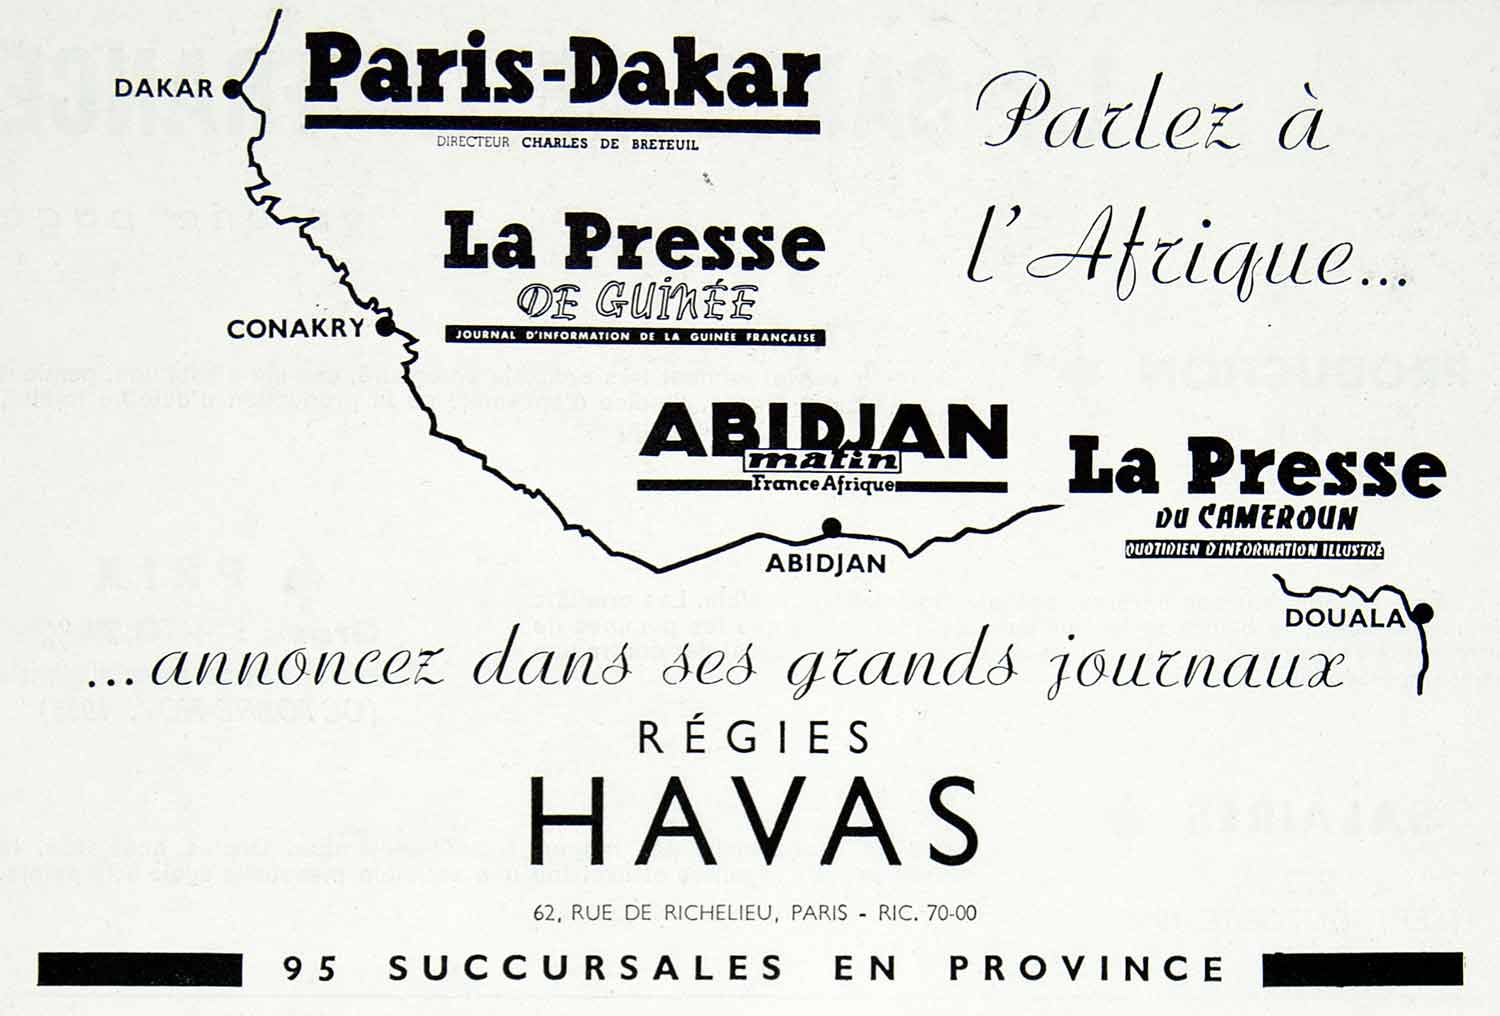 1955 Ad Havas Paris-Daker Abidjan French West African Newspaper Conakry VEN6